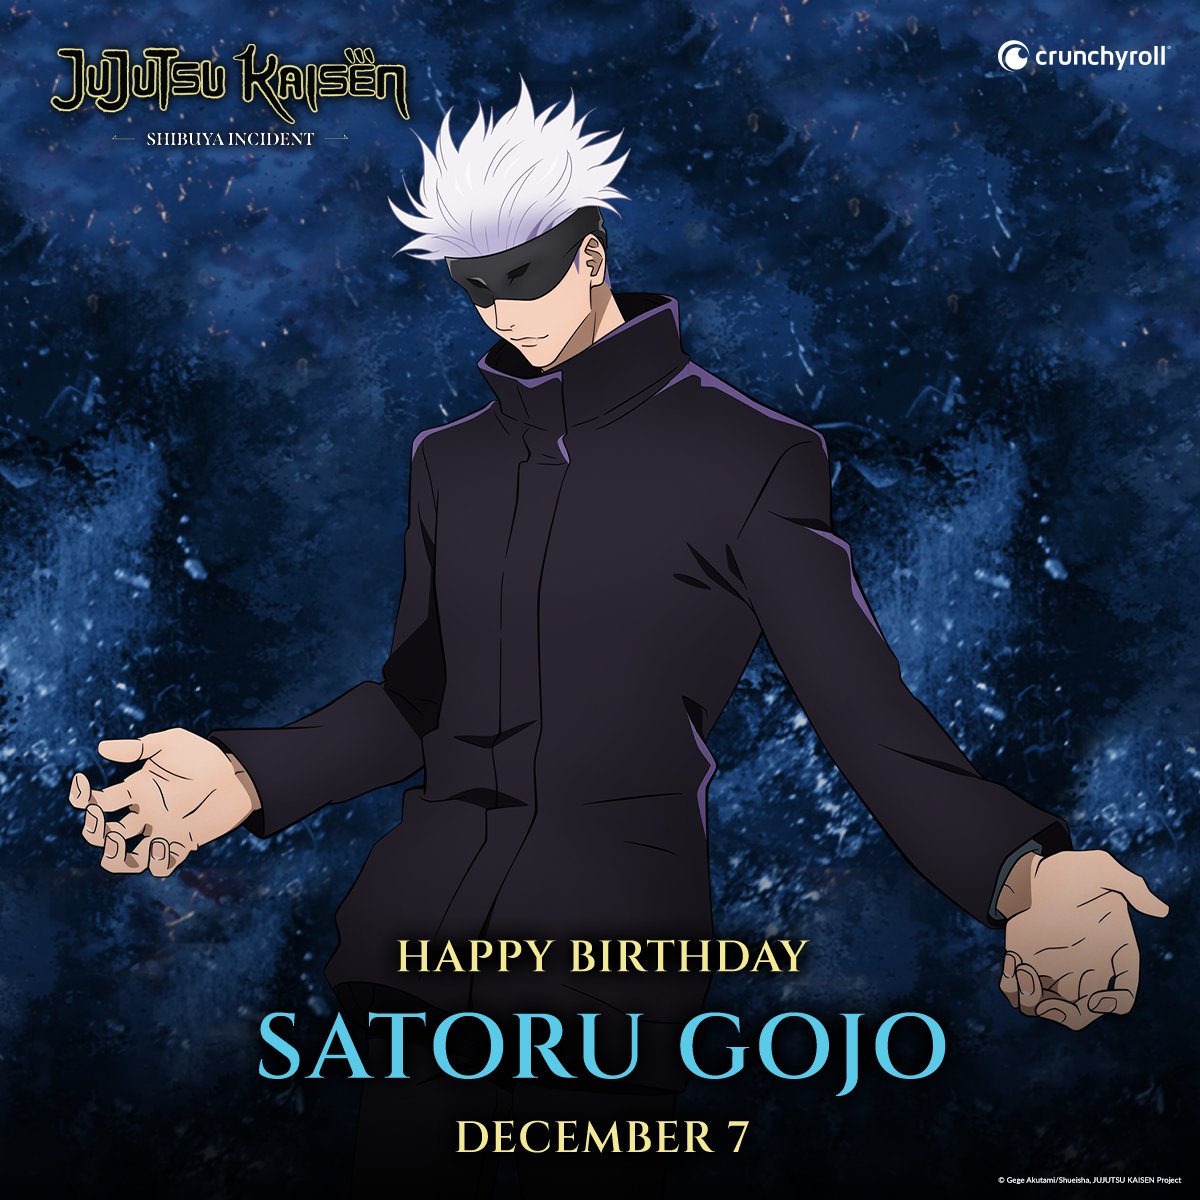 Happy birthday, Satoru Gojo 🎉 #JujutsuKaisen